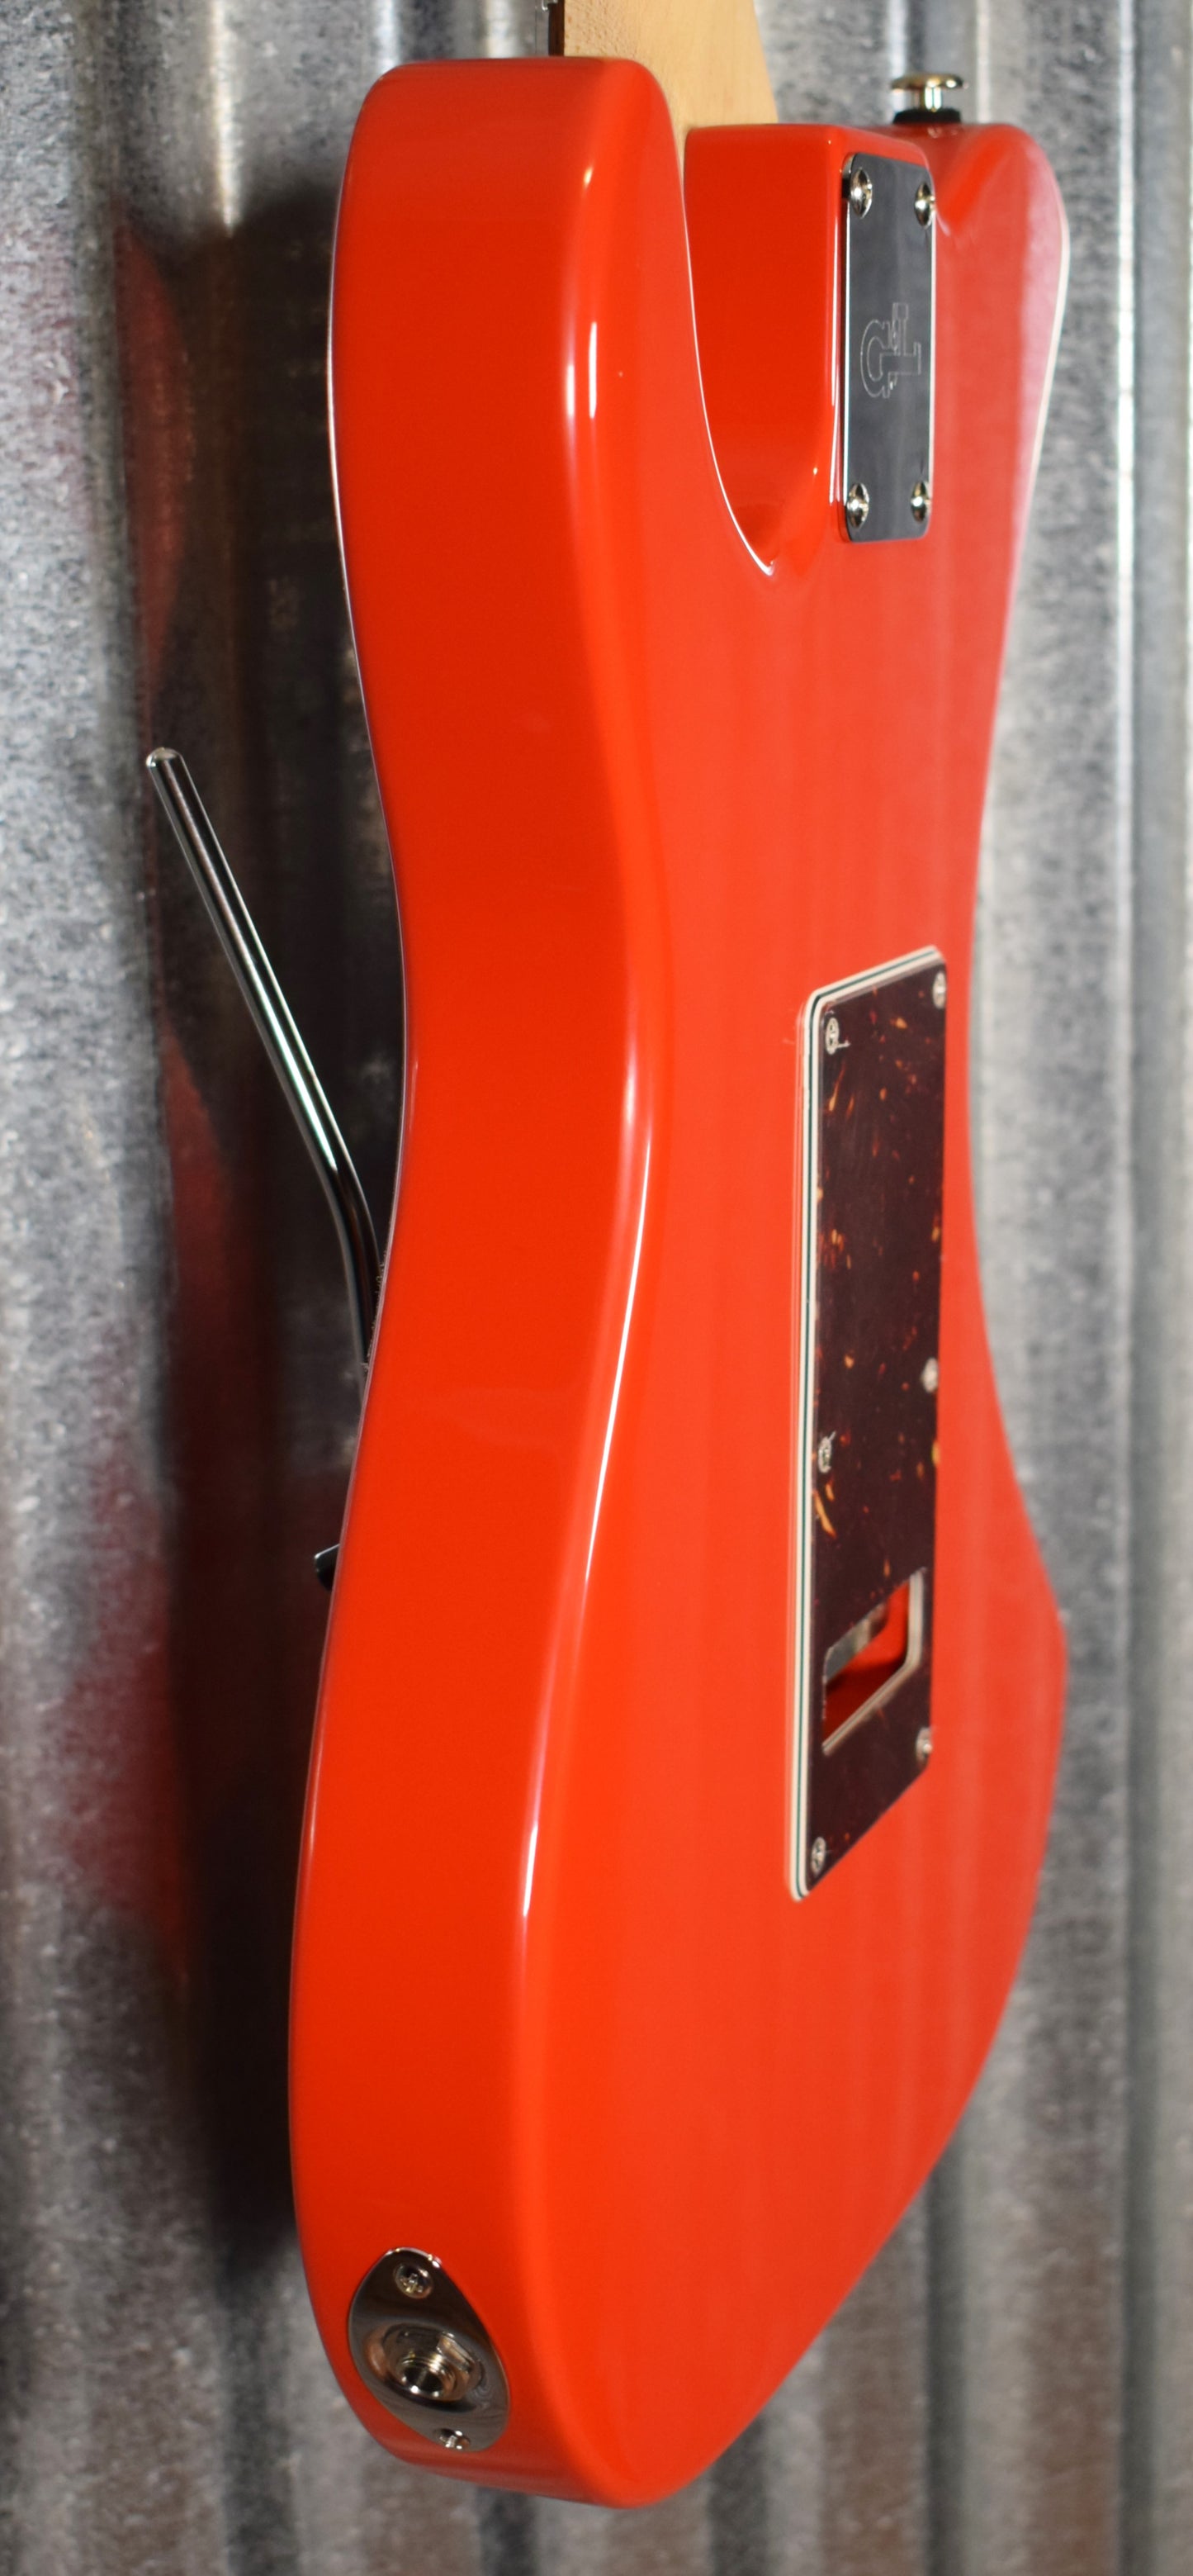 G&L USA ASAT Special Fullerton Red Guitar & Case 2017 #6306